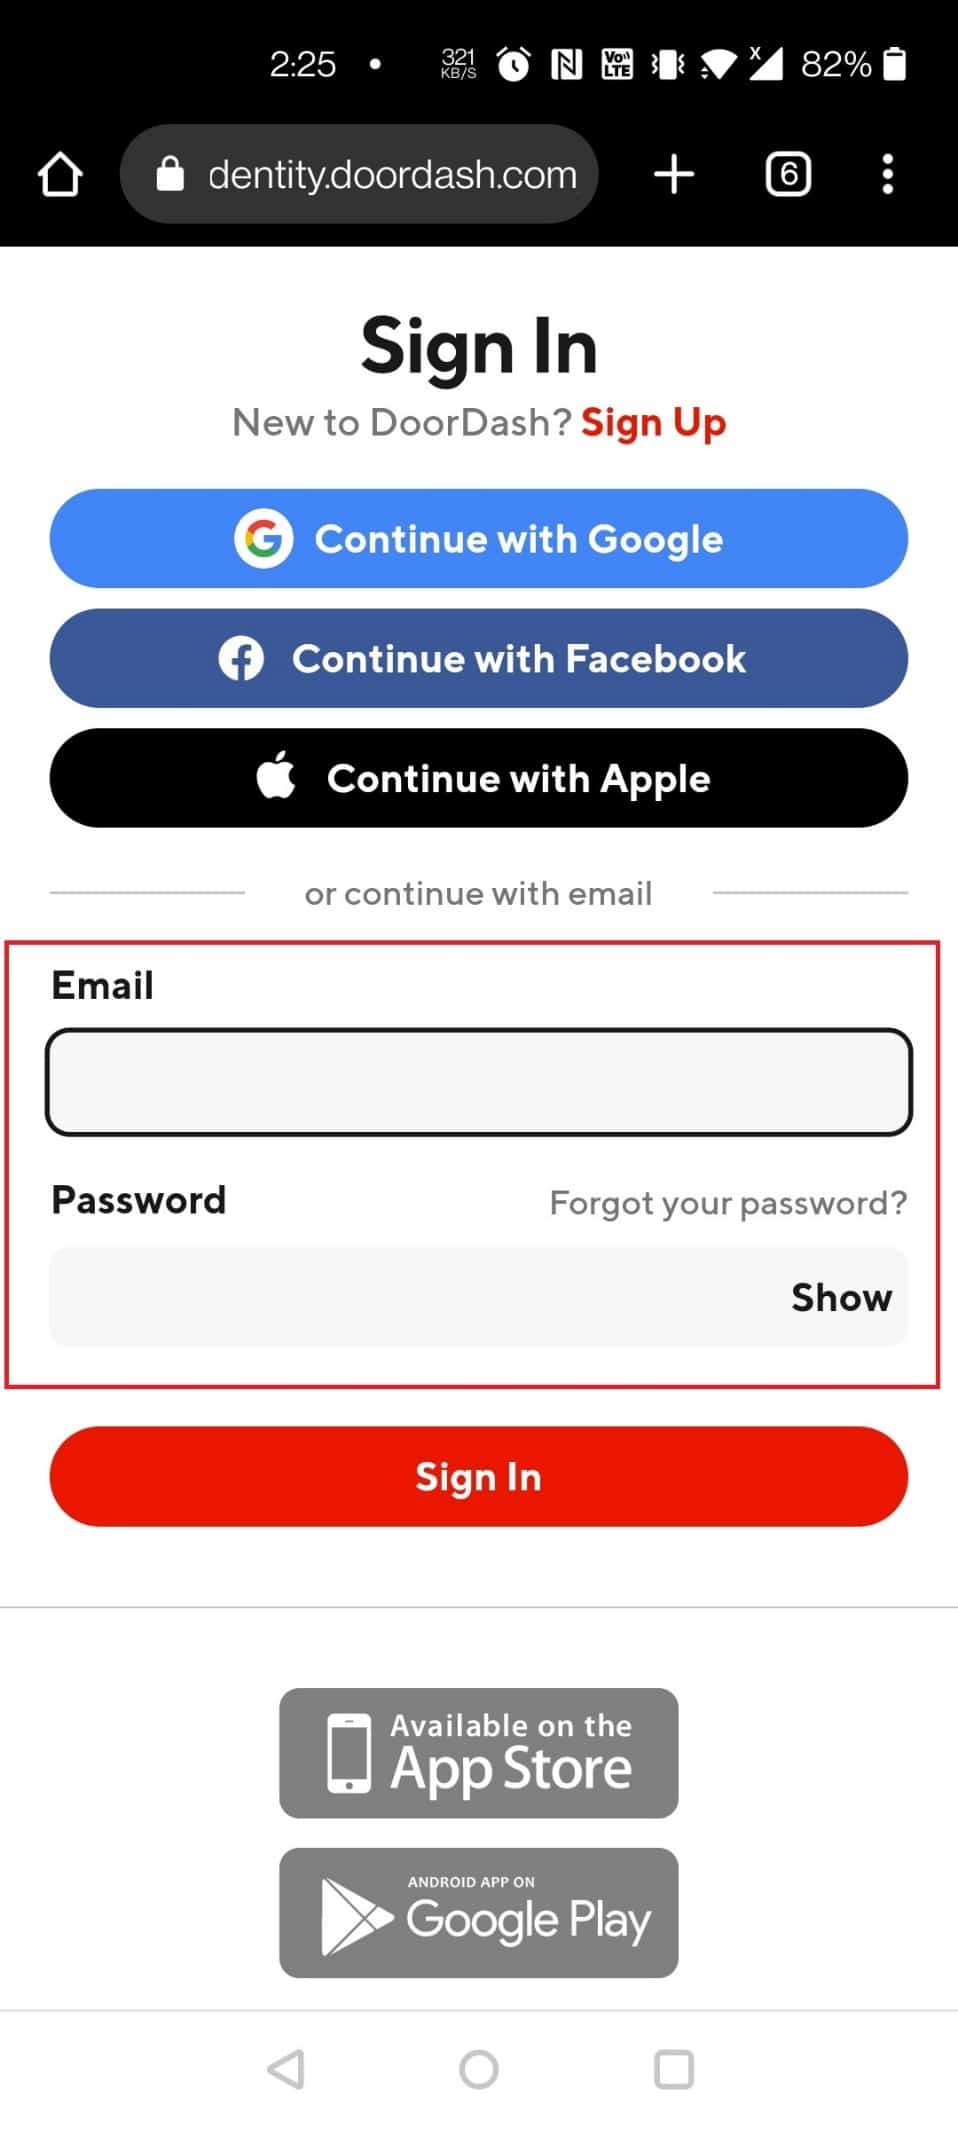 Sign In to your DoorDash account using Email and Password | DoorDash deactivate account